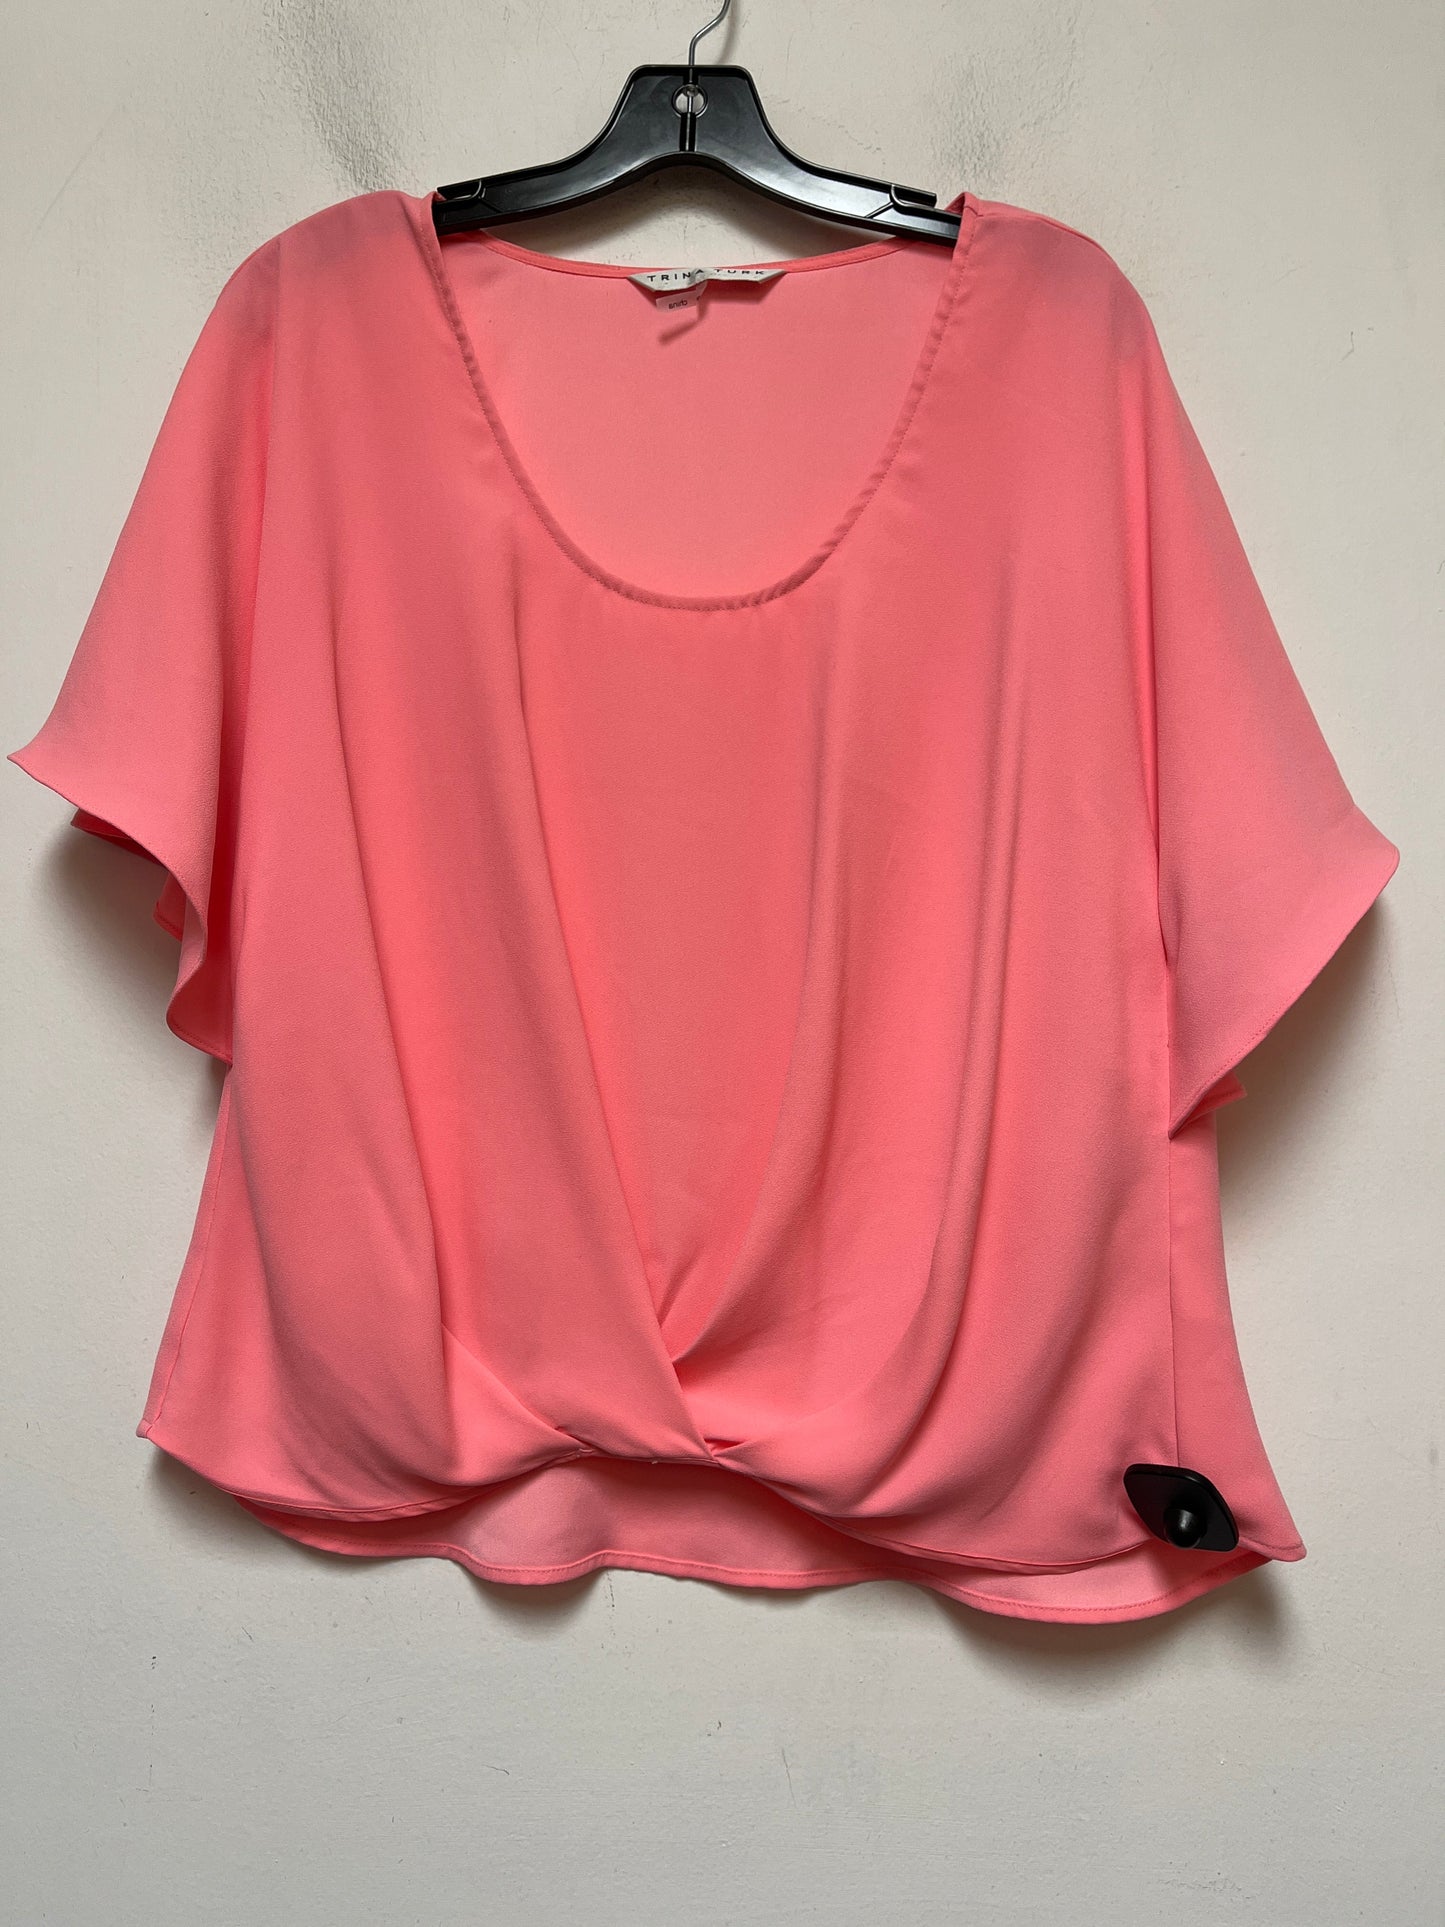 Pink Top Short Sleeve Trina Turk, Size M